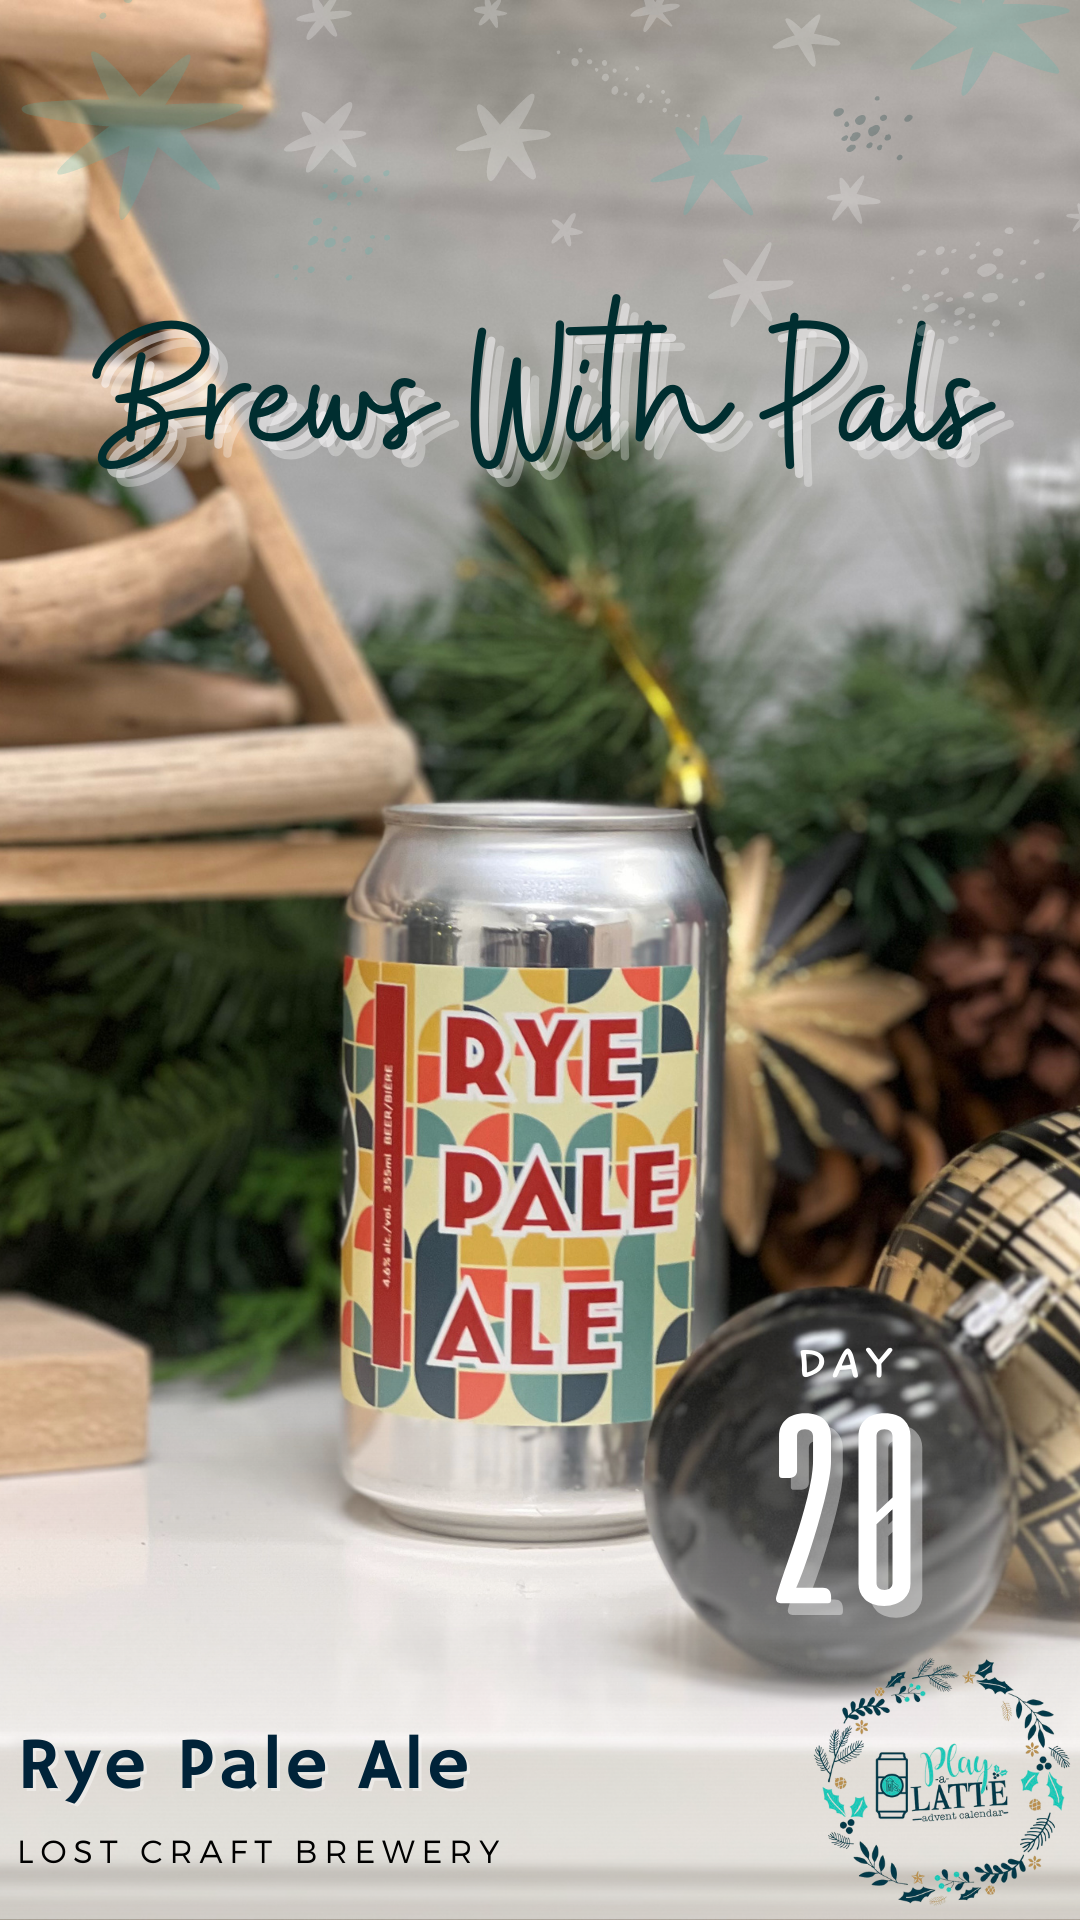 Day 20 - Rye Pale Ale